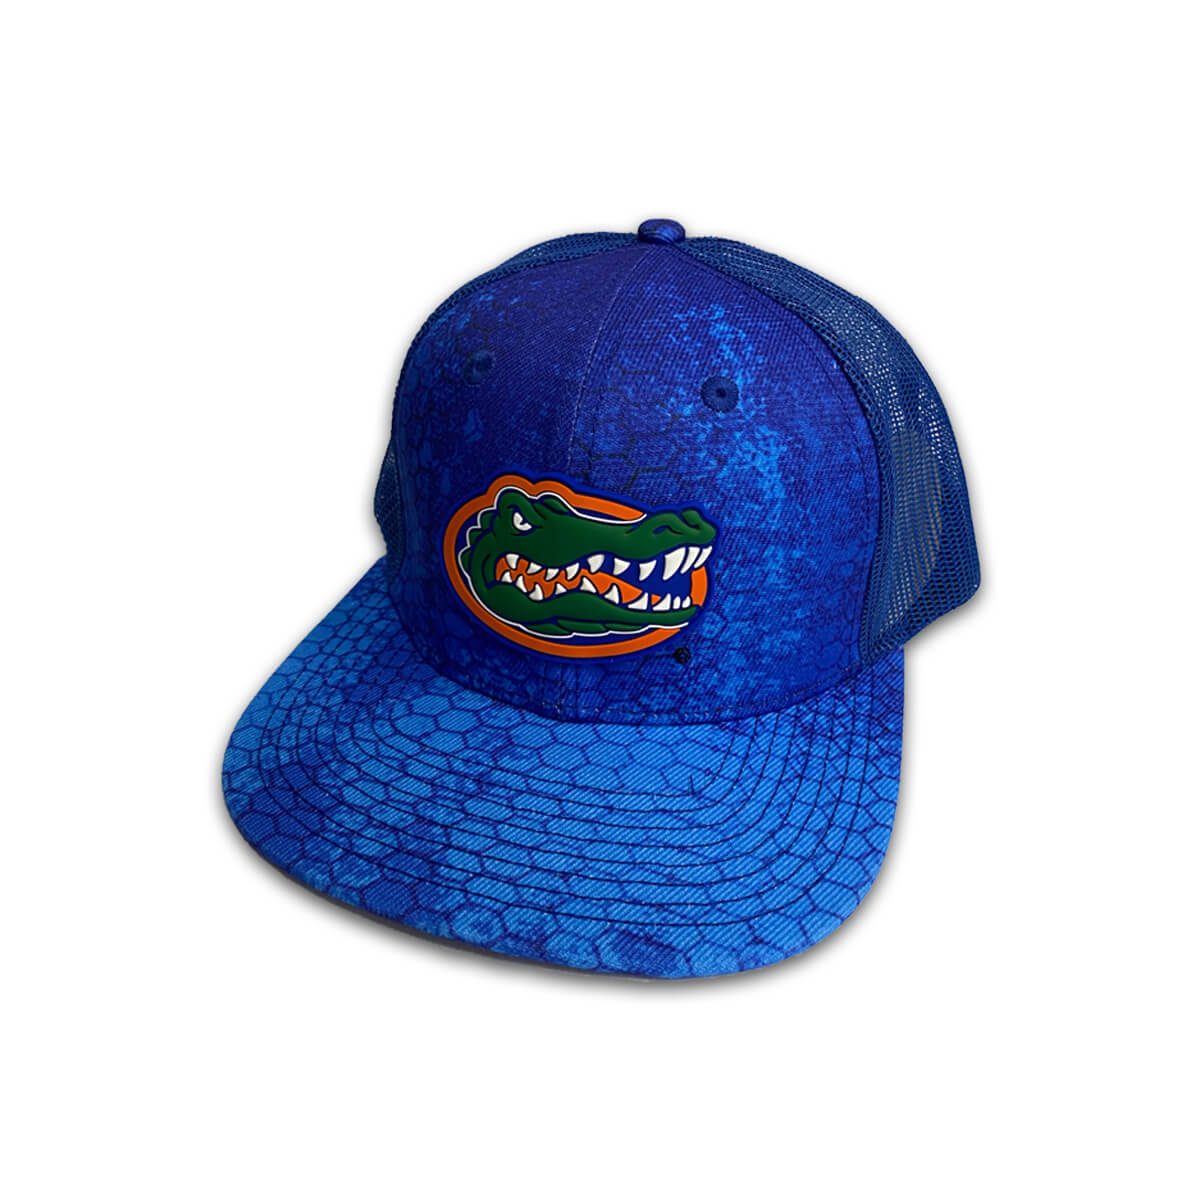 Florida Gators Rubber Gator Patch Hat